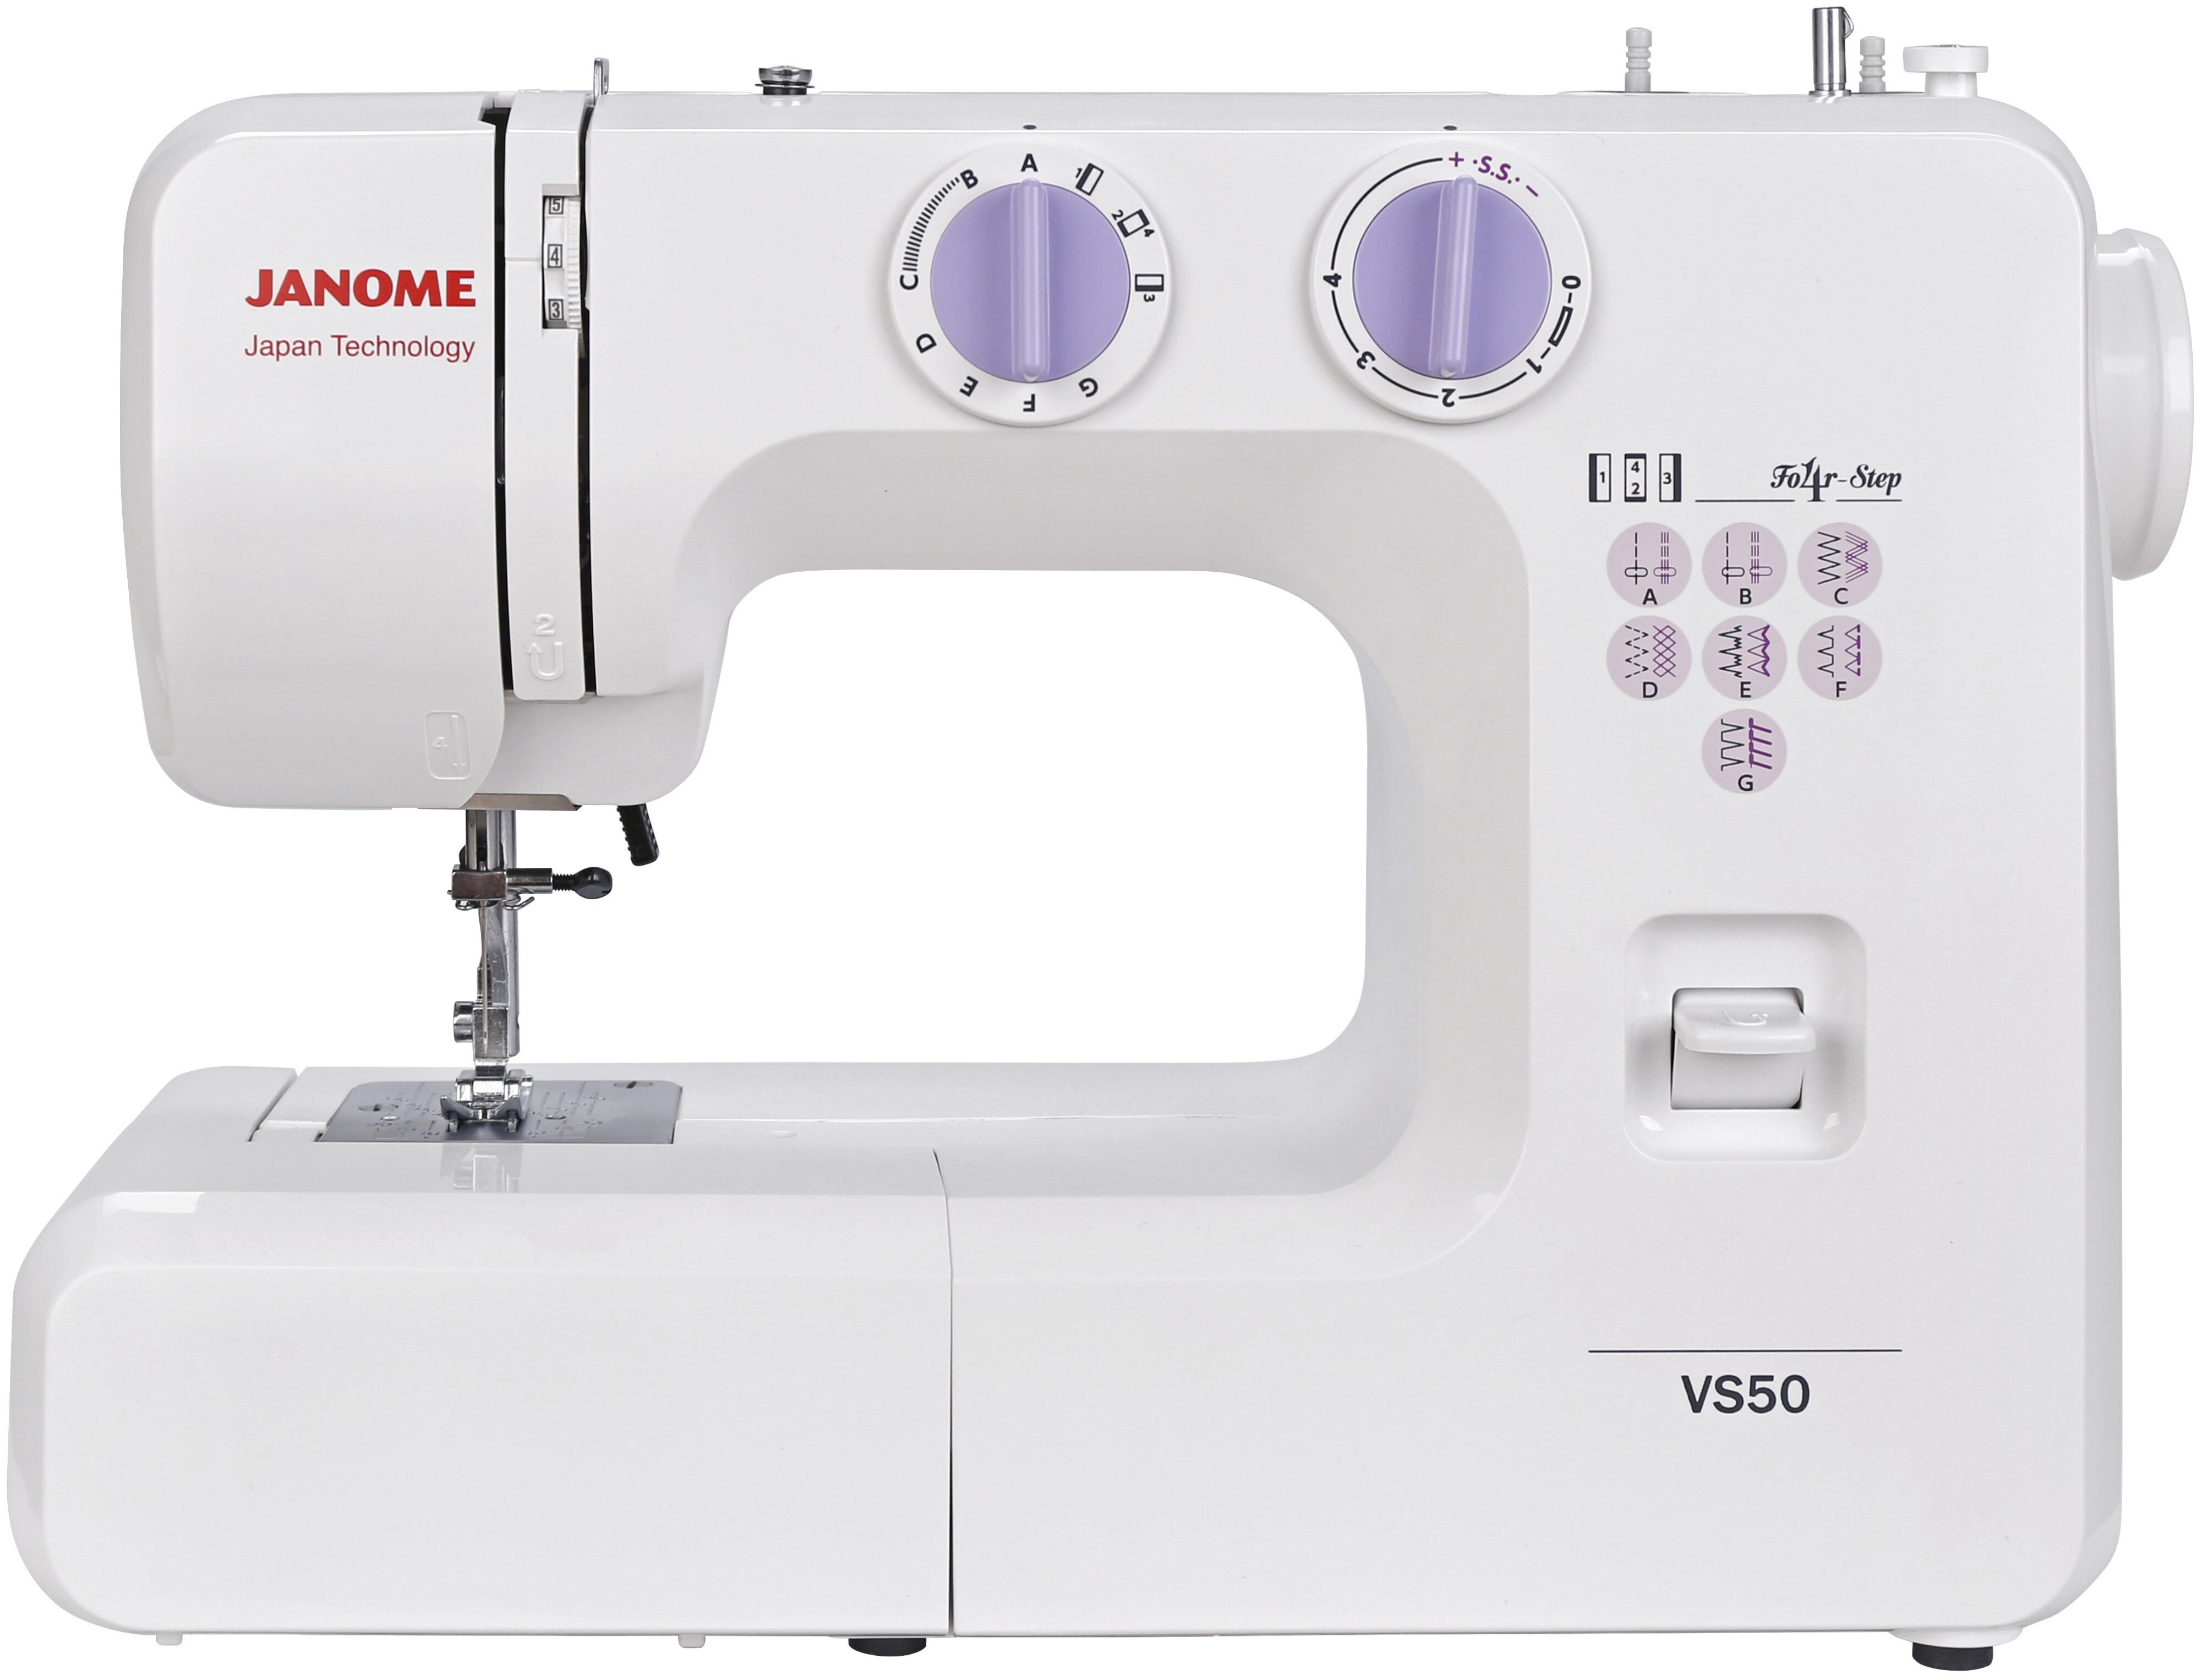 JANOME VS 50 швейная машина